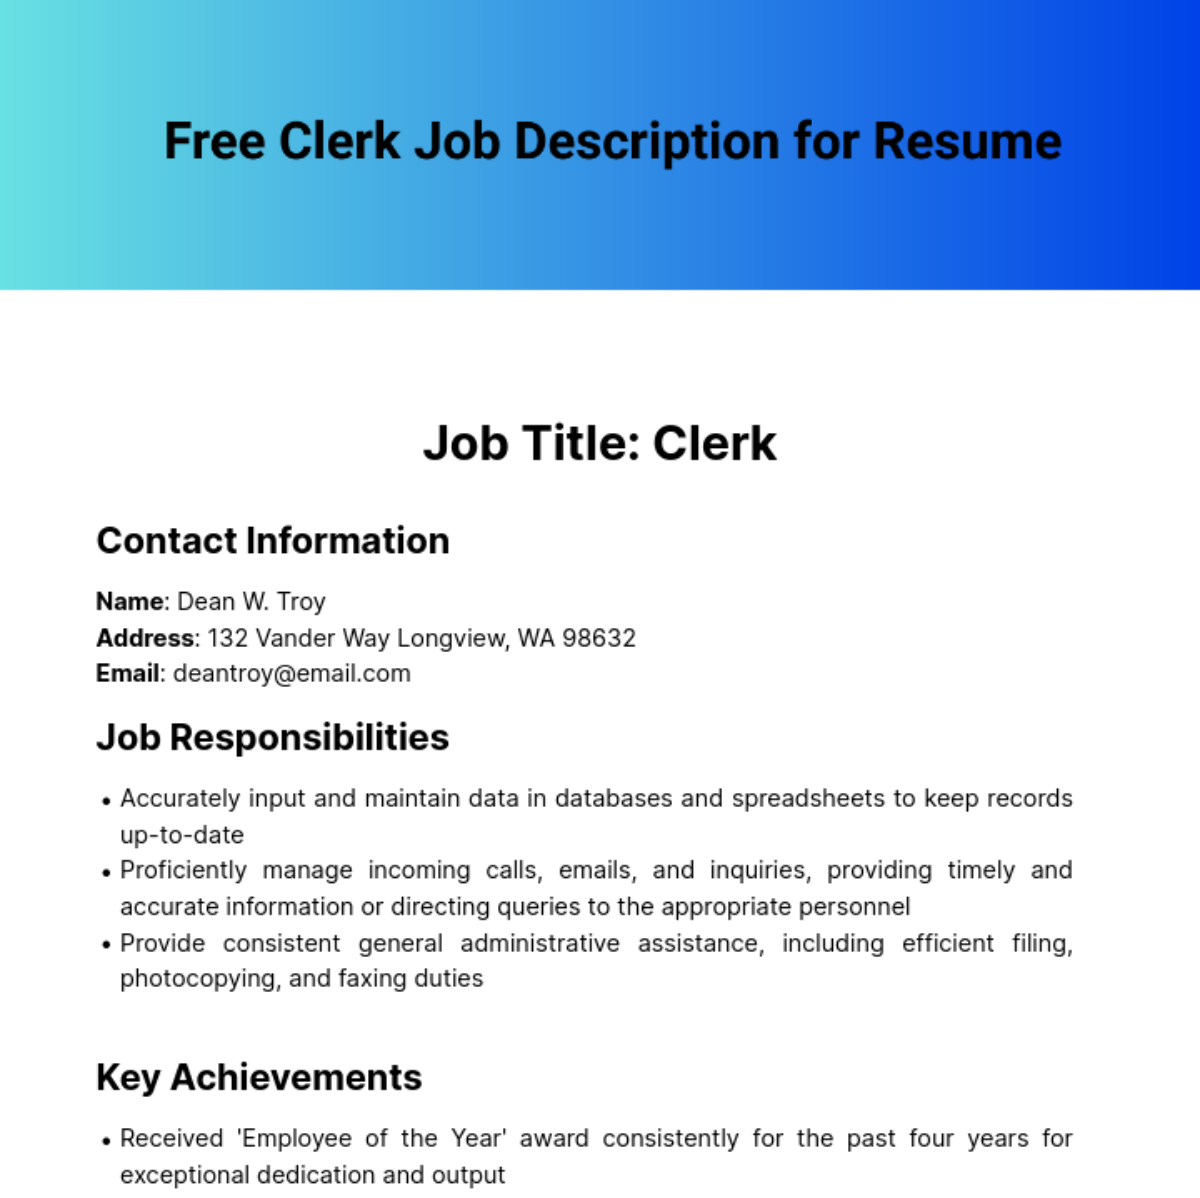 Free Clerk Job Description for Resume Template